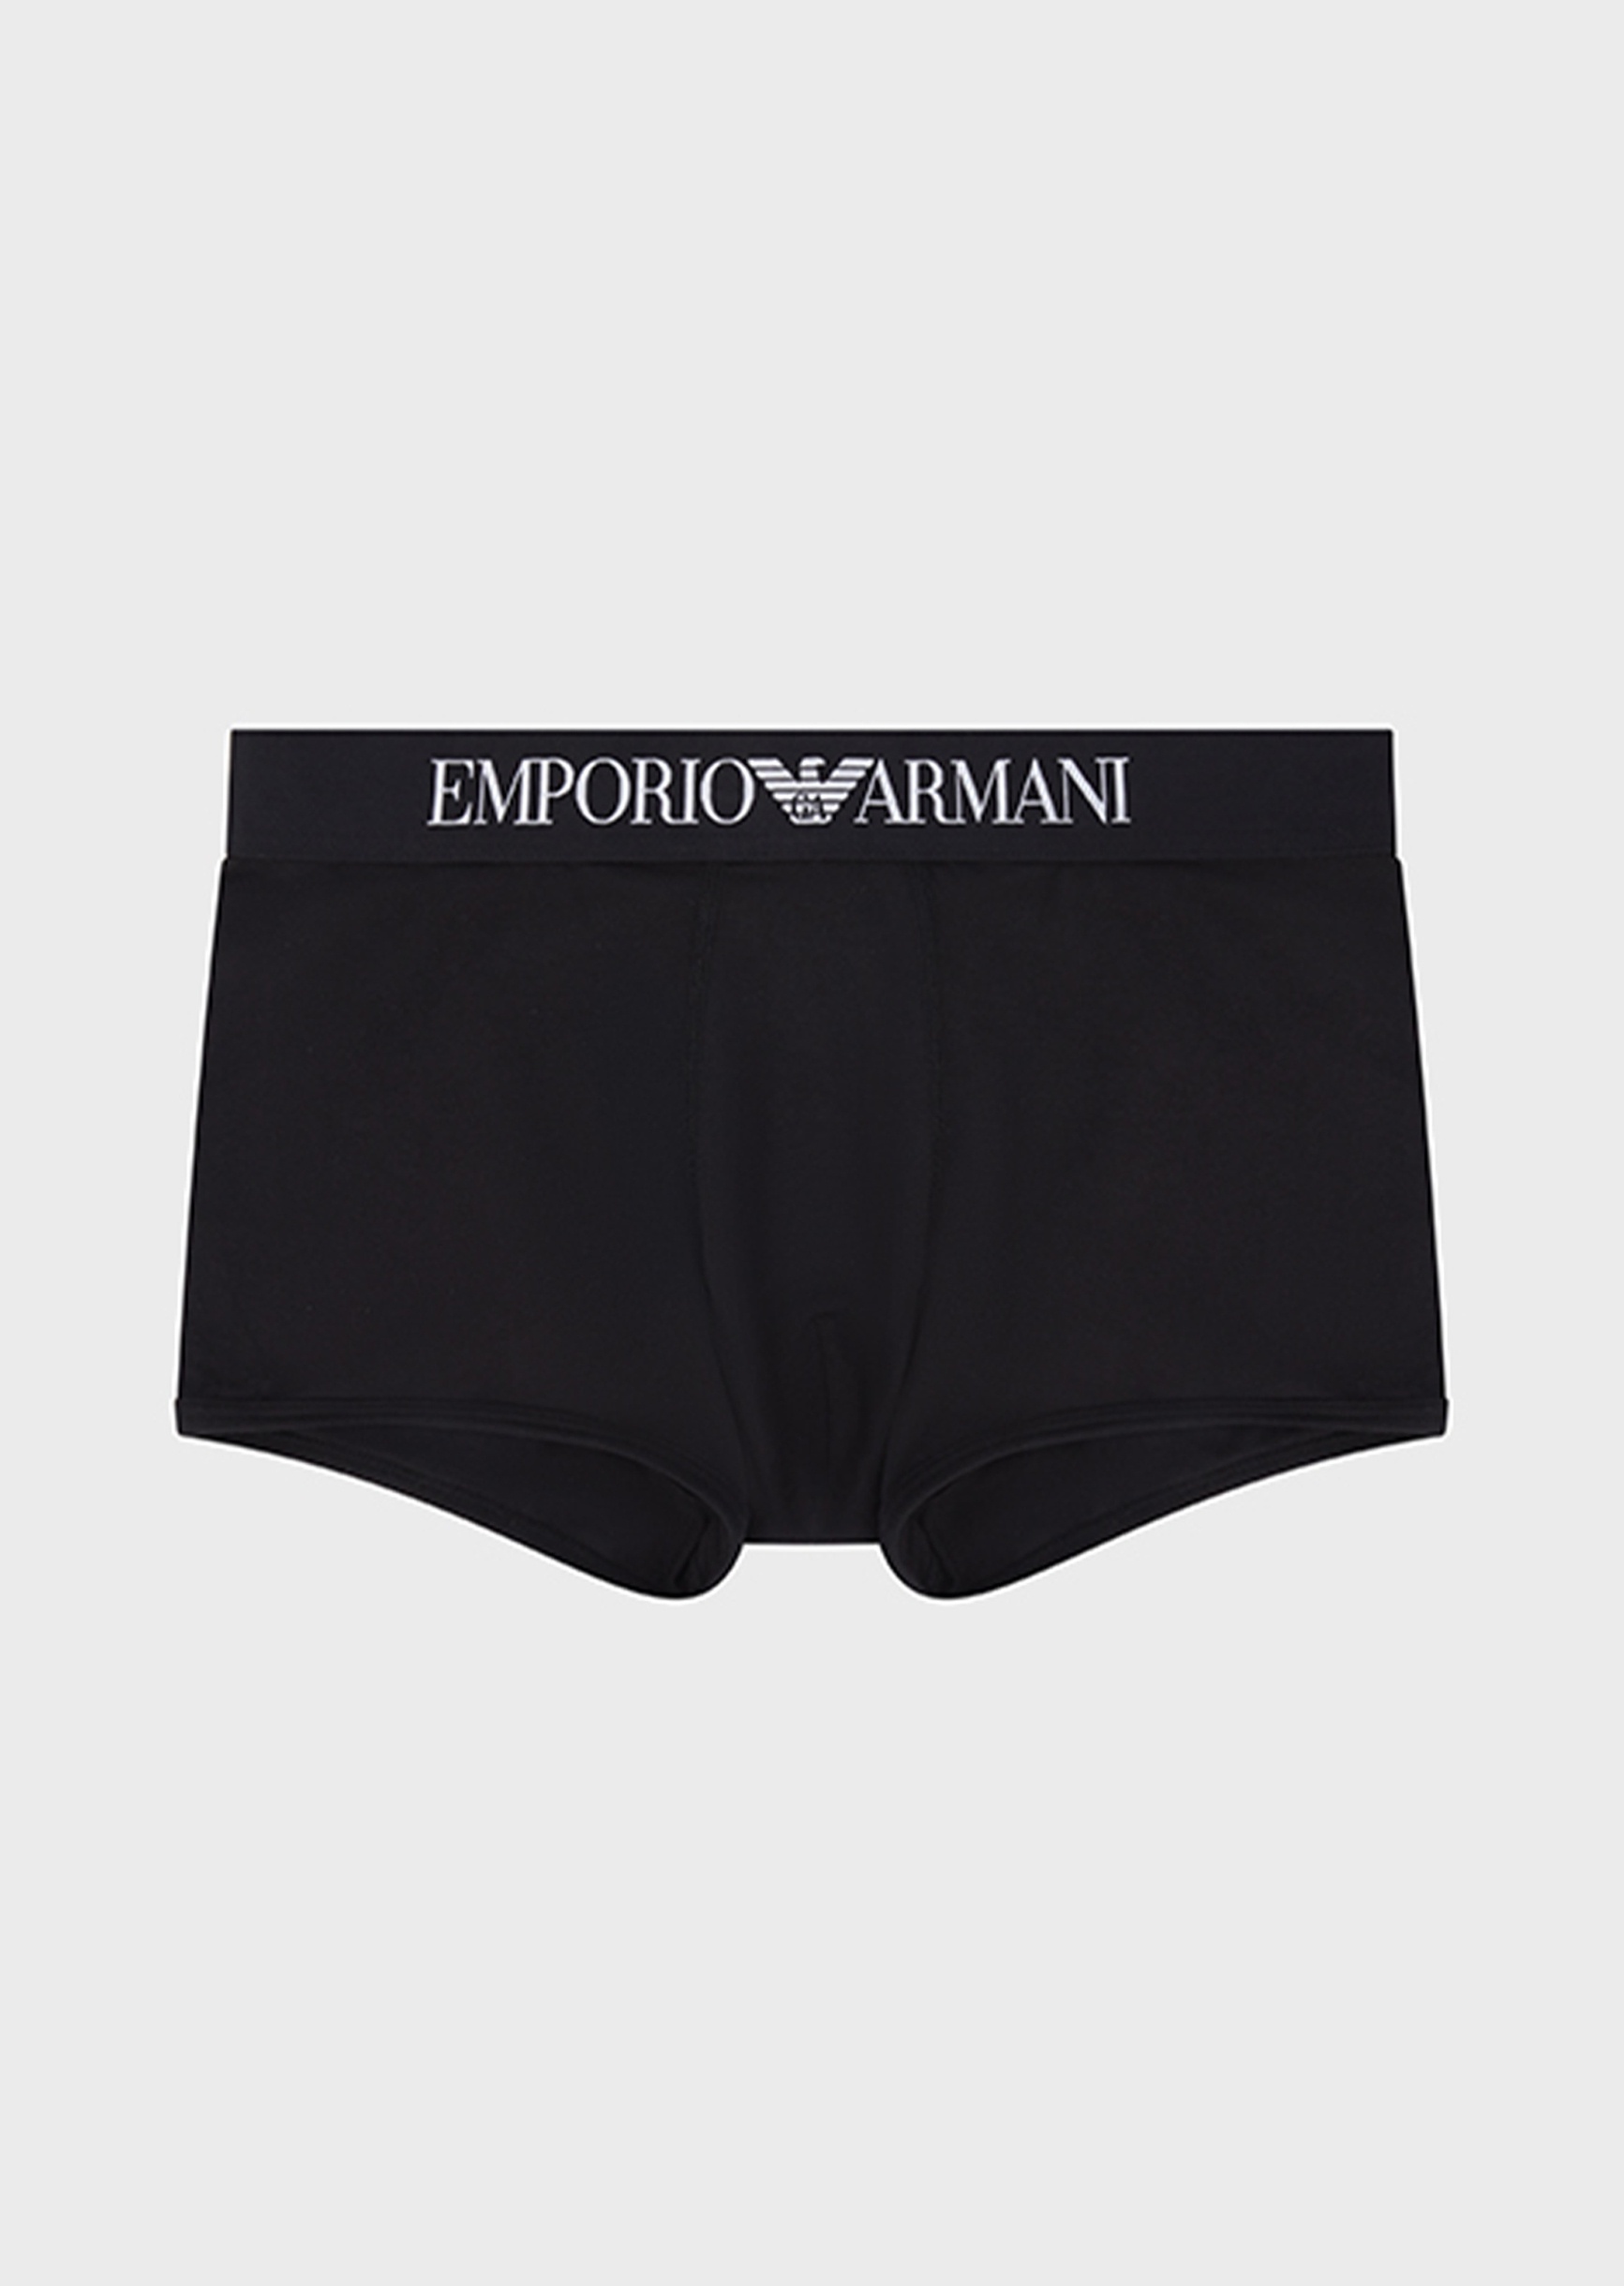 Emporio Armani 经典内裤袜子套装